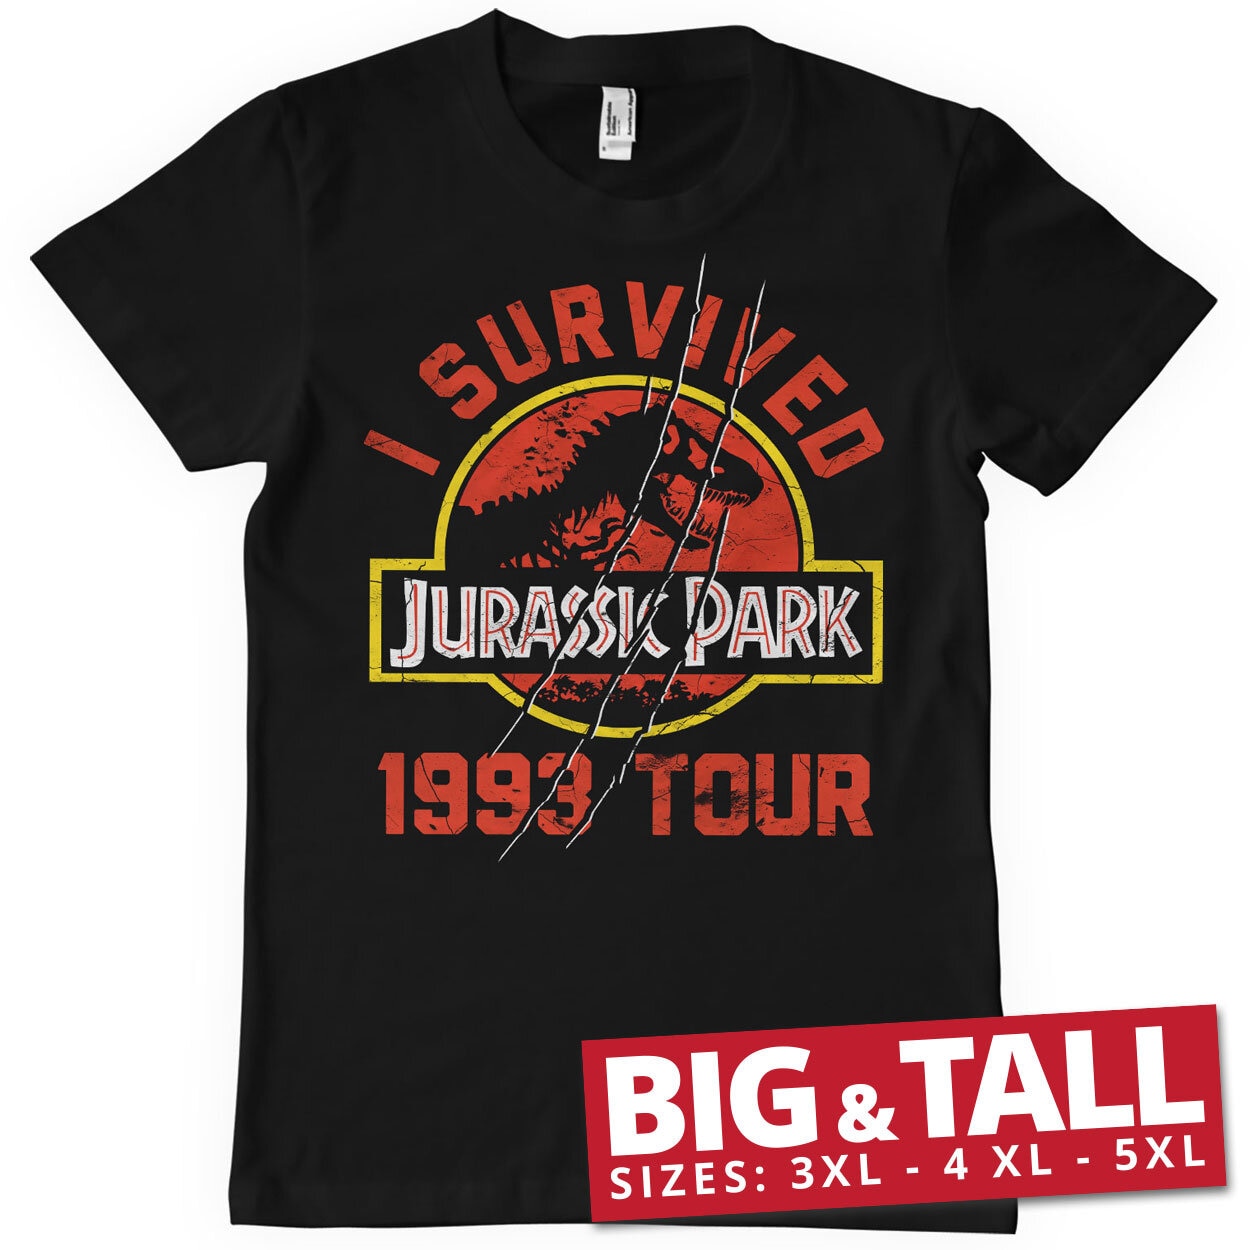 Jurassic Park 1993 Tour Big & Tall T-Shirt